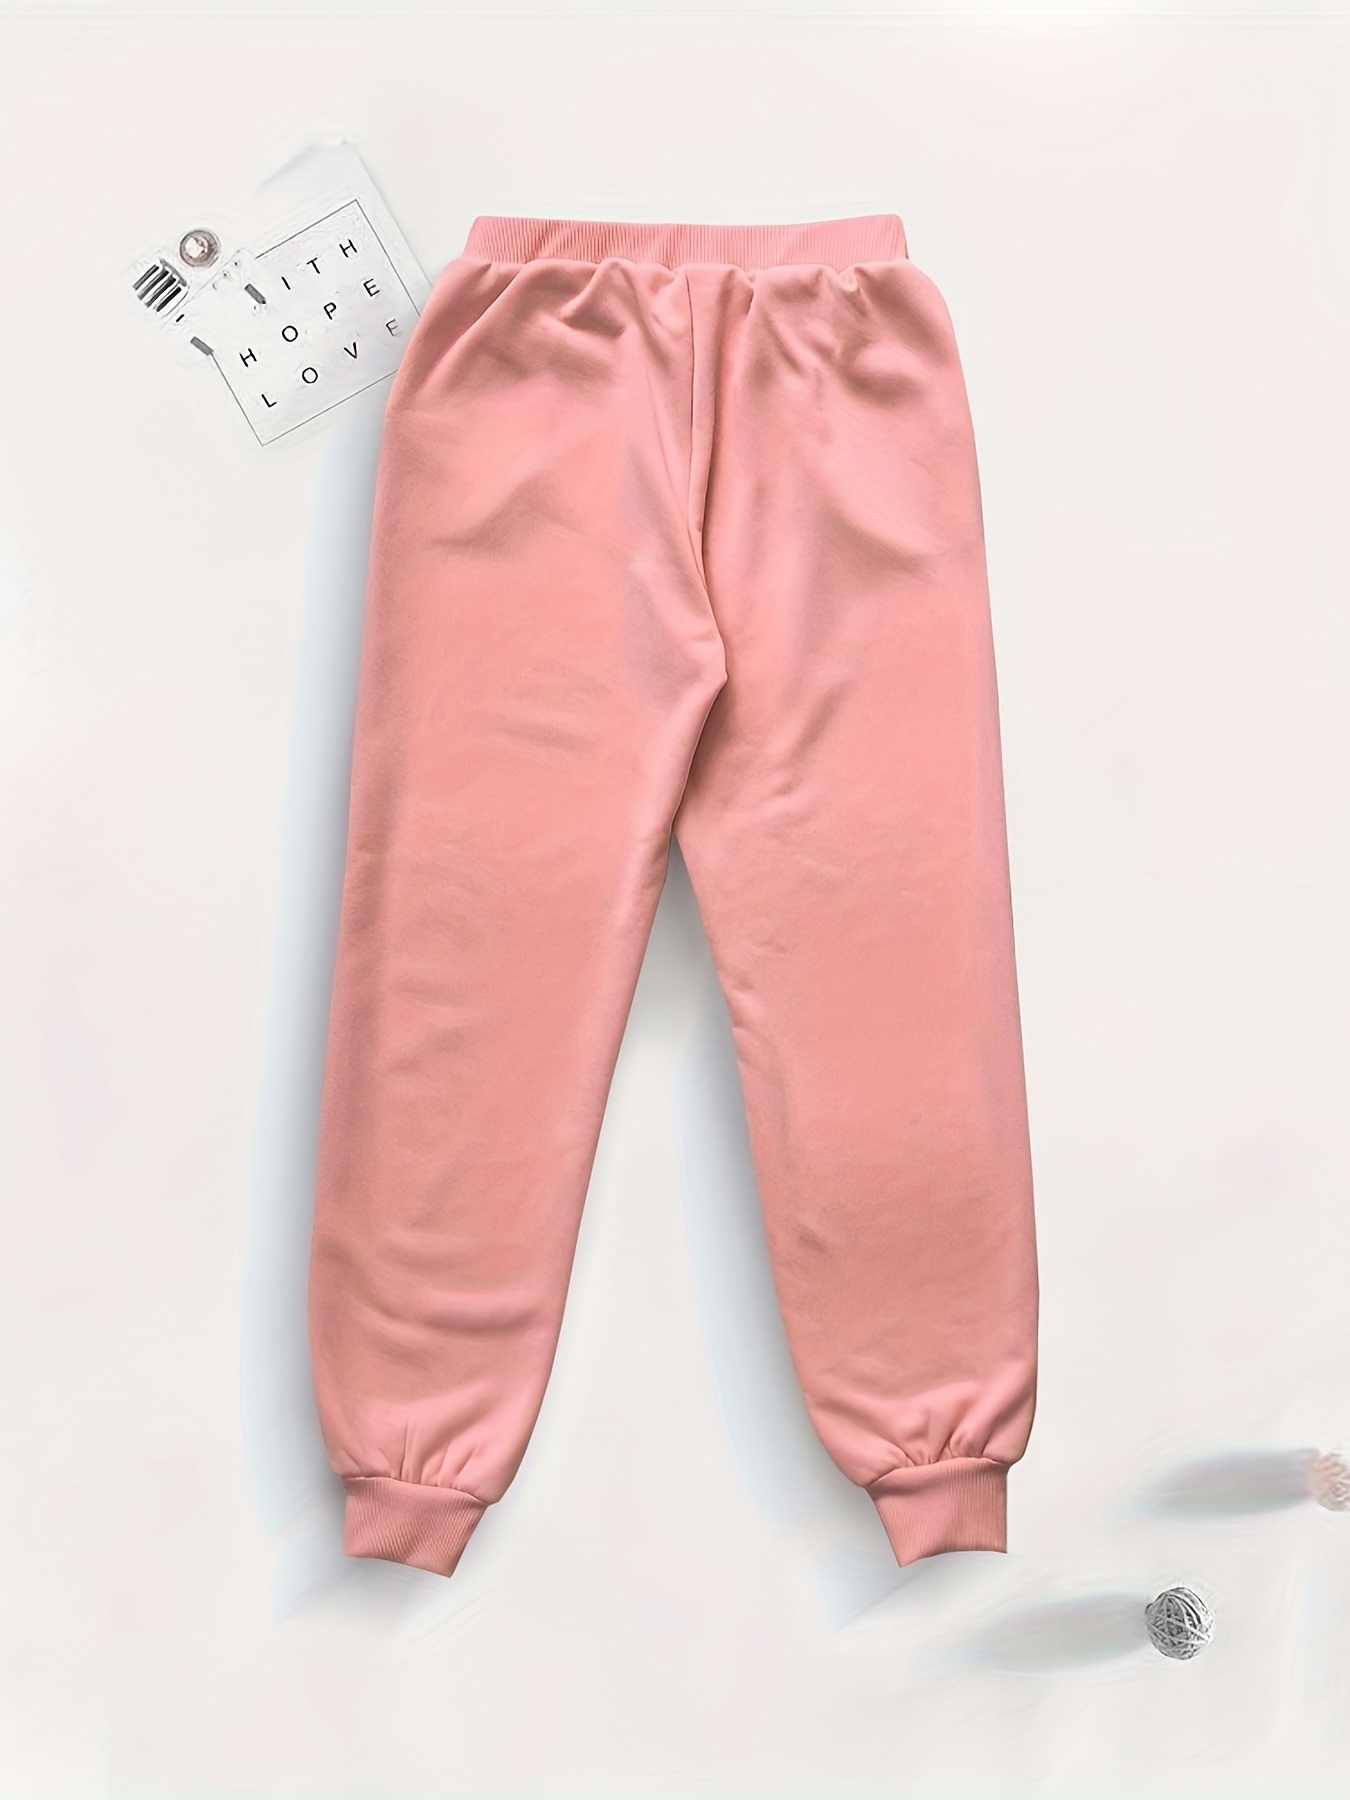 Women's Pink Sweatpants, Pink A+F Sweatpants